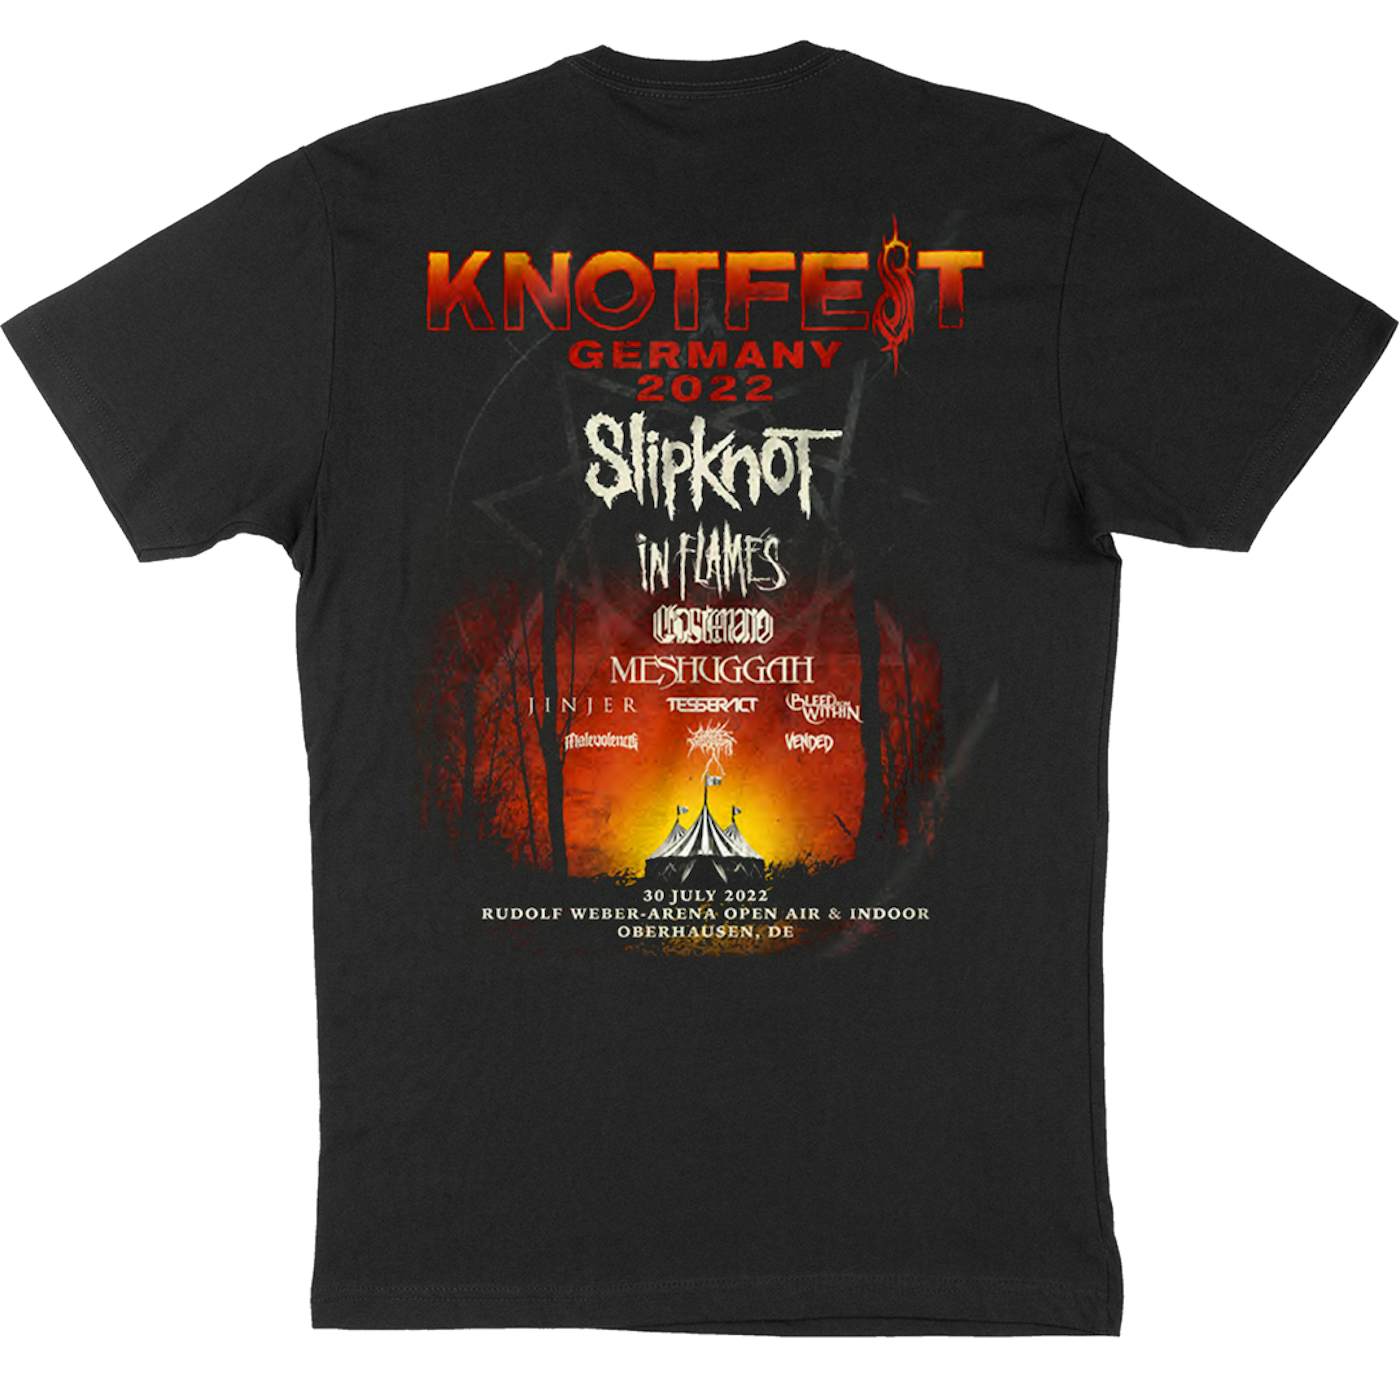 Slipknot Knotfest Germany 3 Skulls T-Shirt